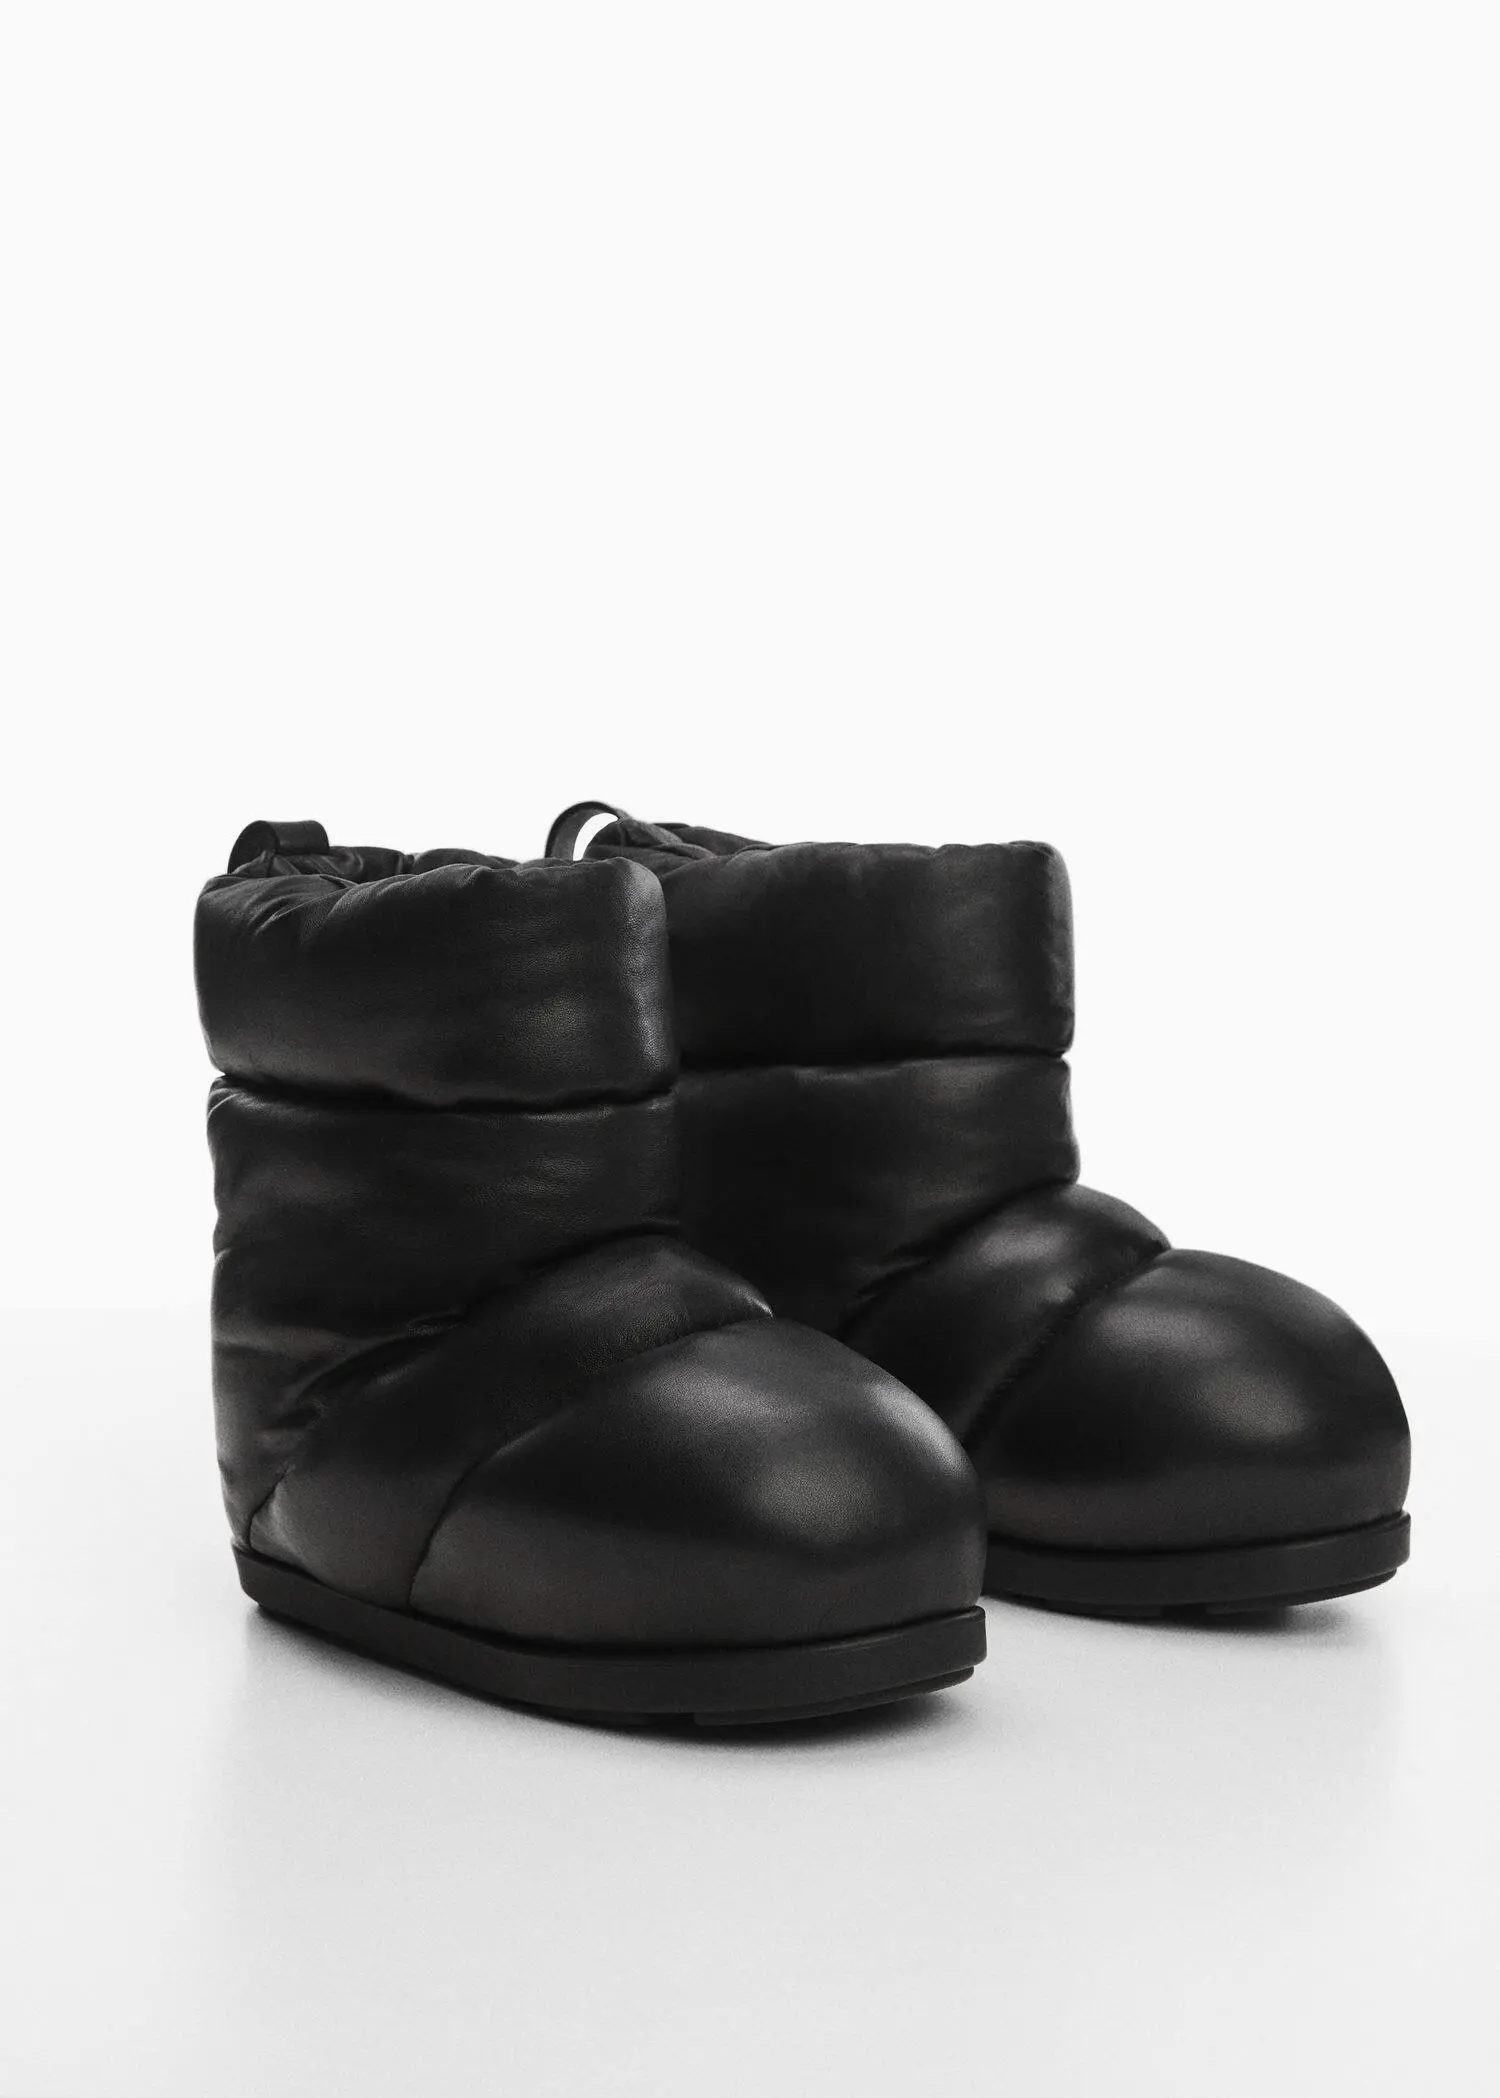 Mango Padded leather boots. 3